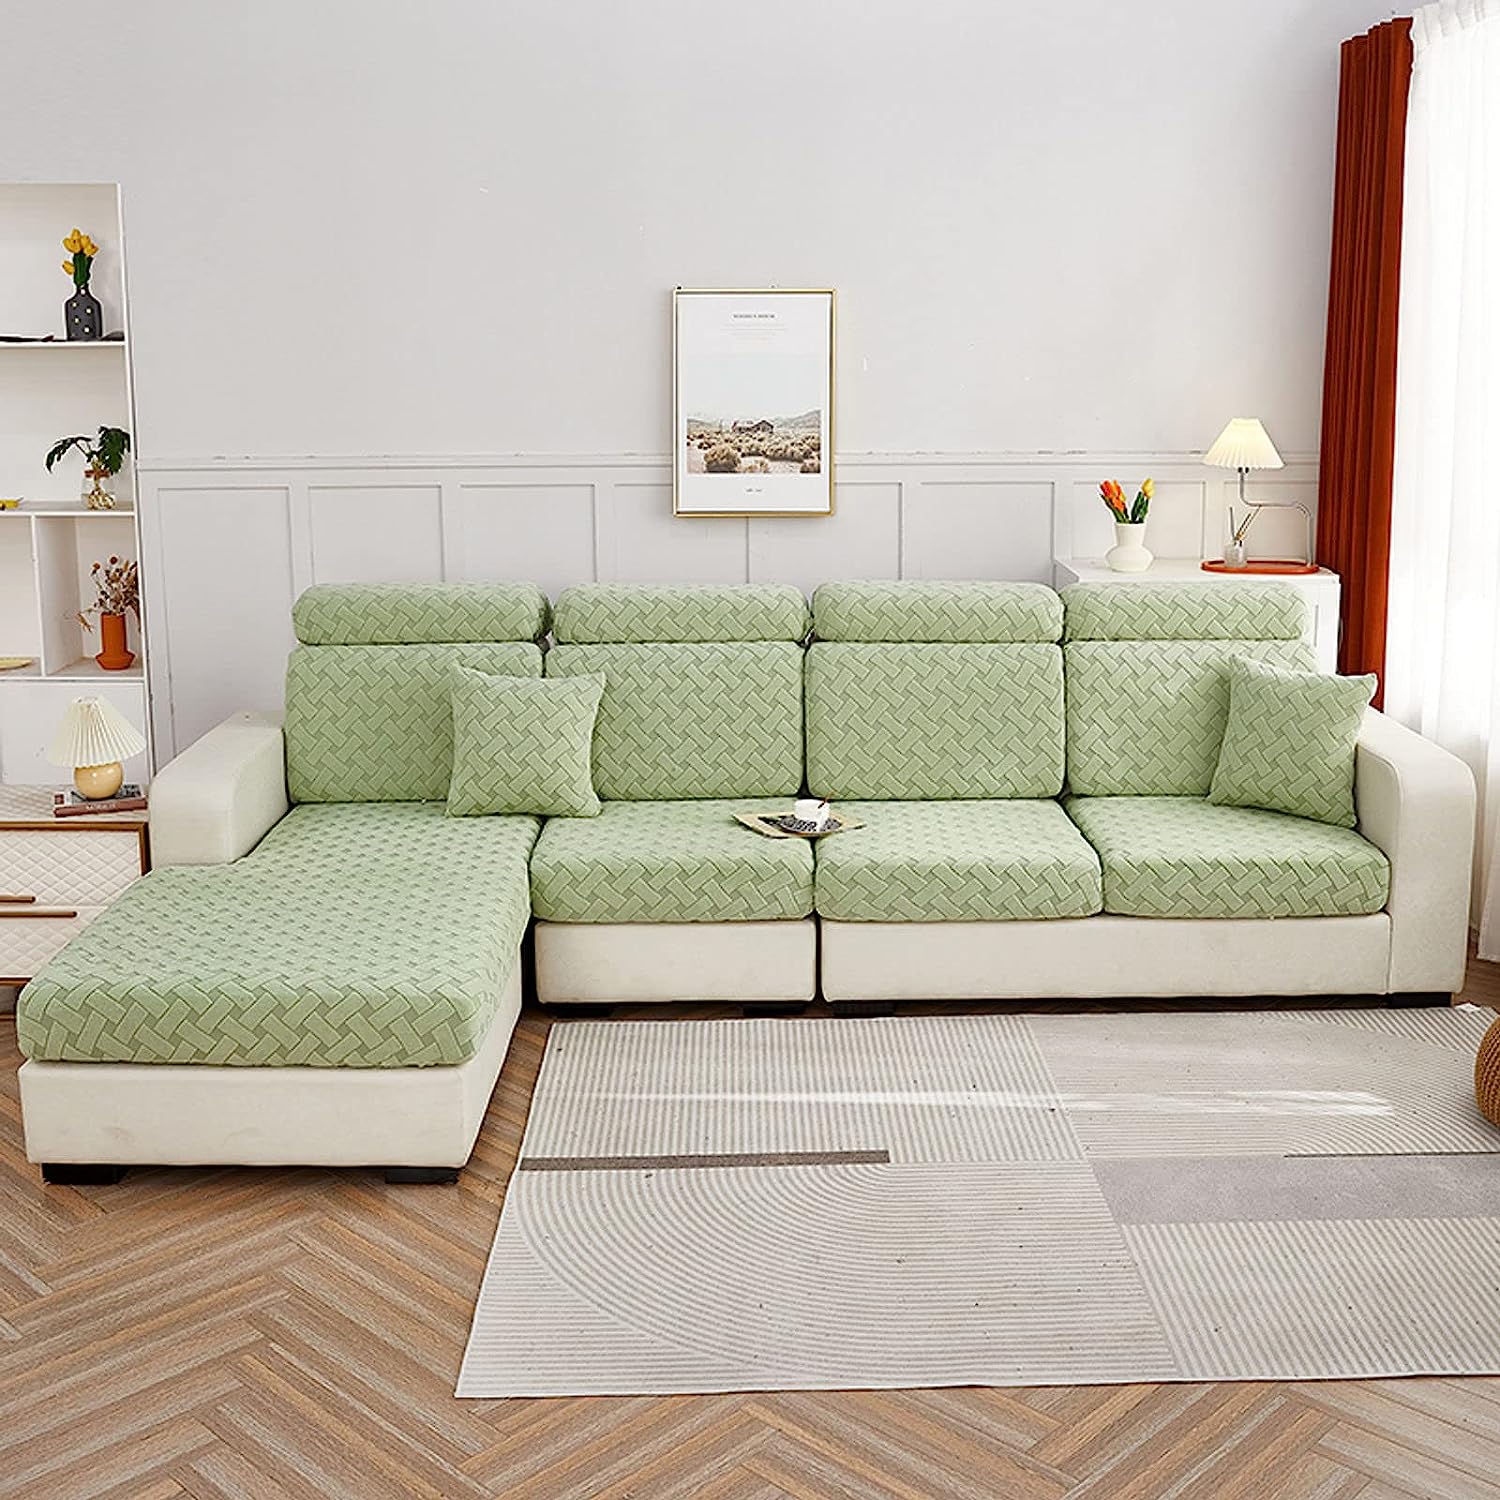 Sofa Cushion Cover - Avocado Green - Soft Elastic Jacquard Weave